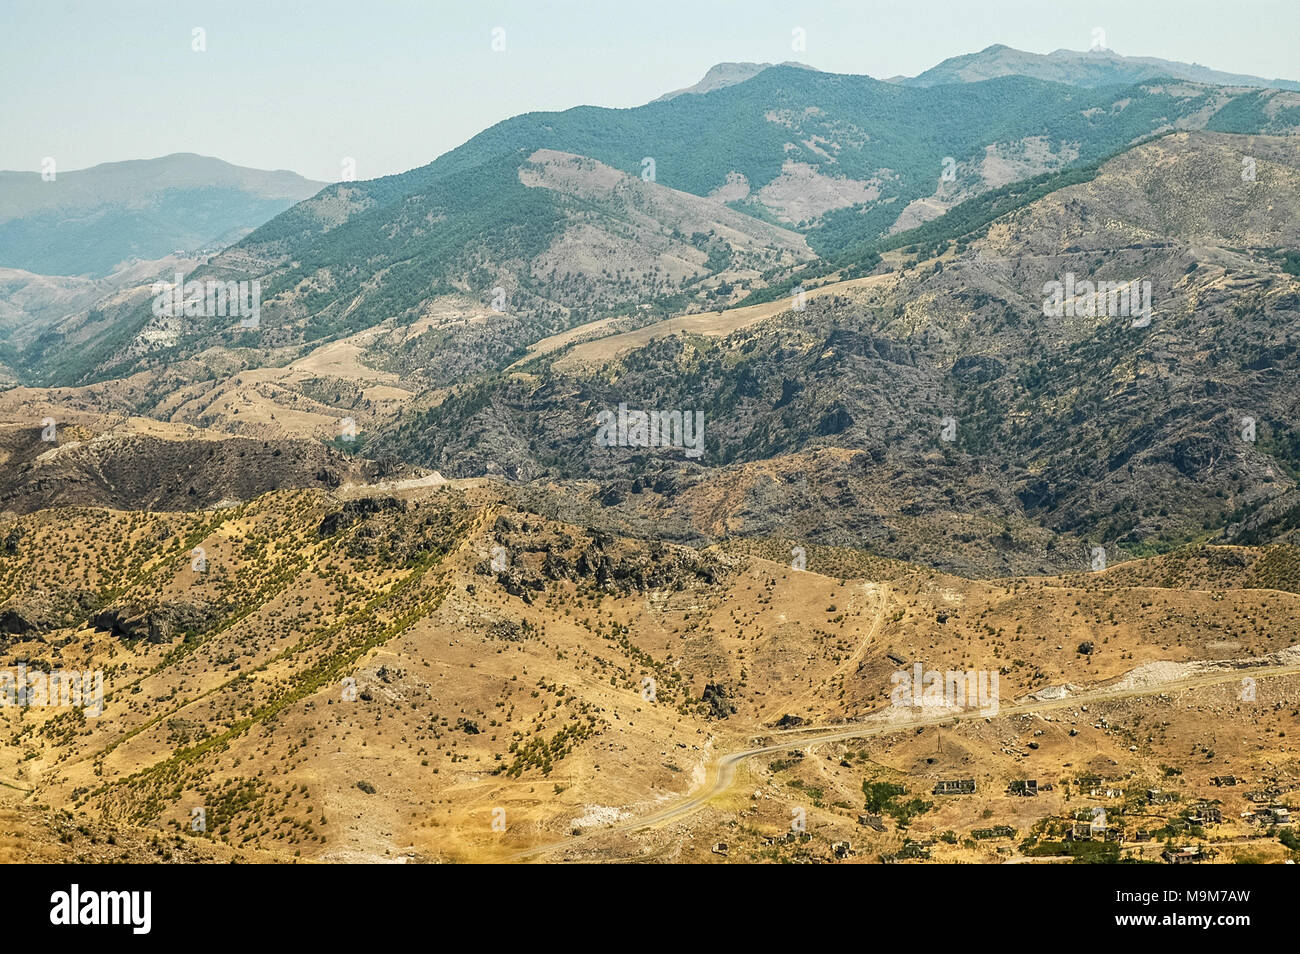 Rocky, arid mountains in Nagorno Karabakh, a disputed territory between Armenia and Azerbaijan but internationally recognized as part of Azerbaijan Stock Photo